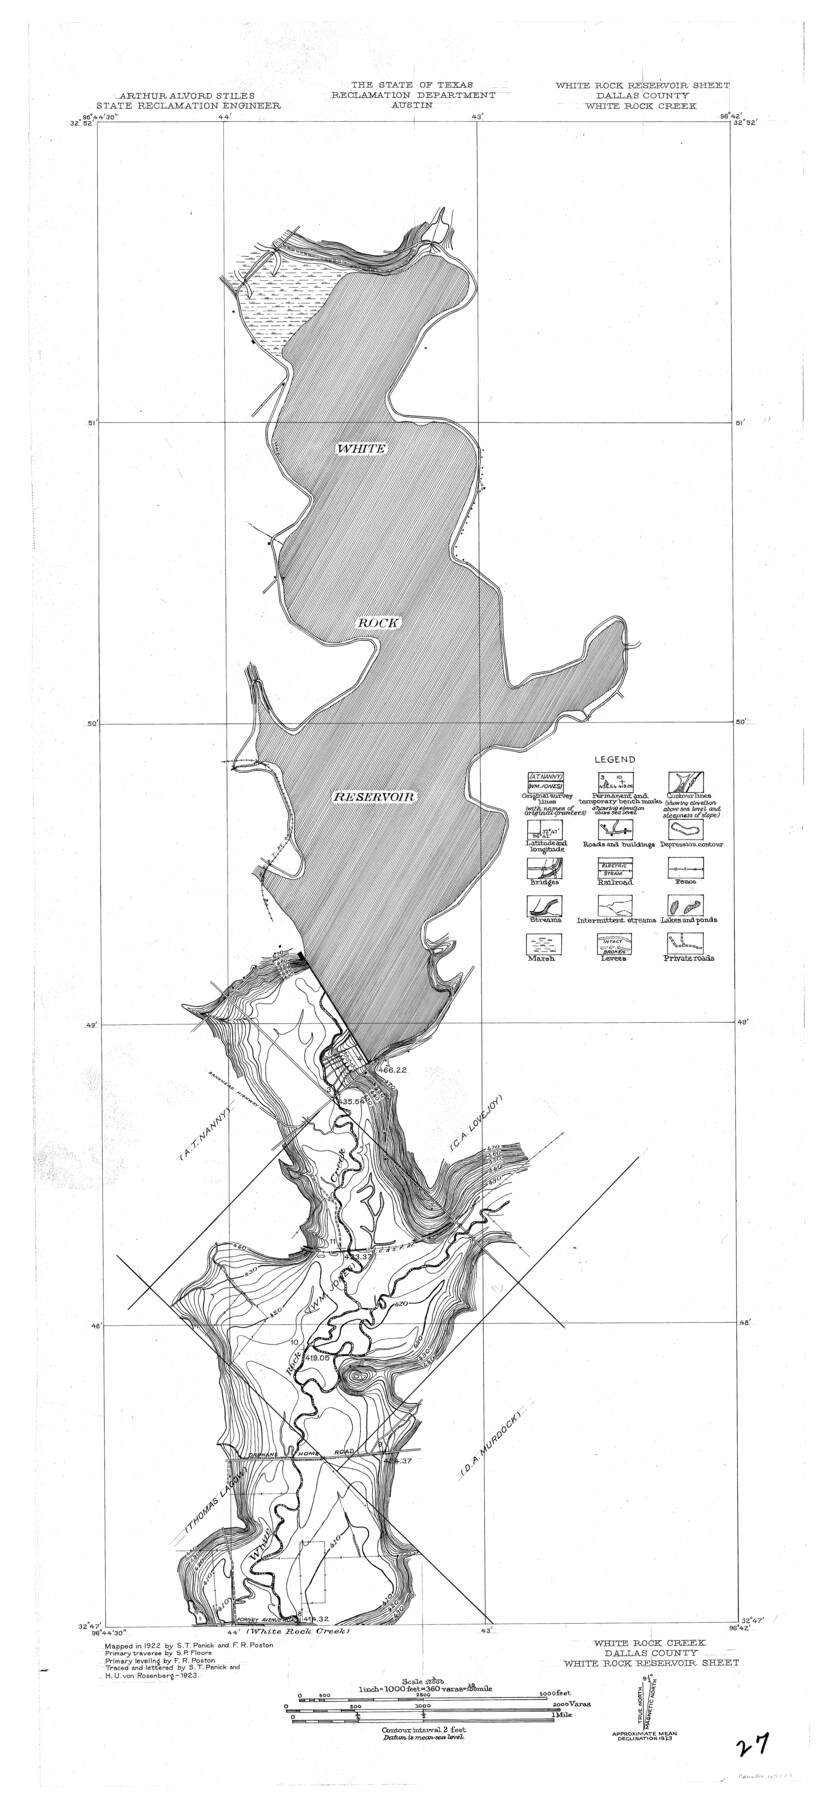 65213, Trinity River, White Rock Reservoir Sheet/White Rock Creek, General Map Collection